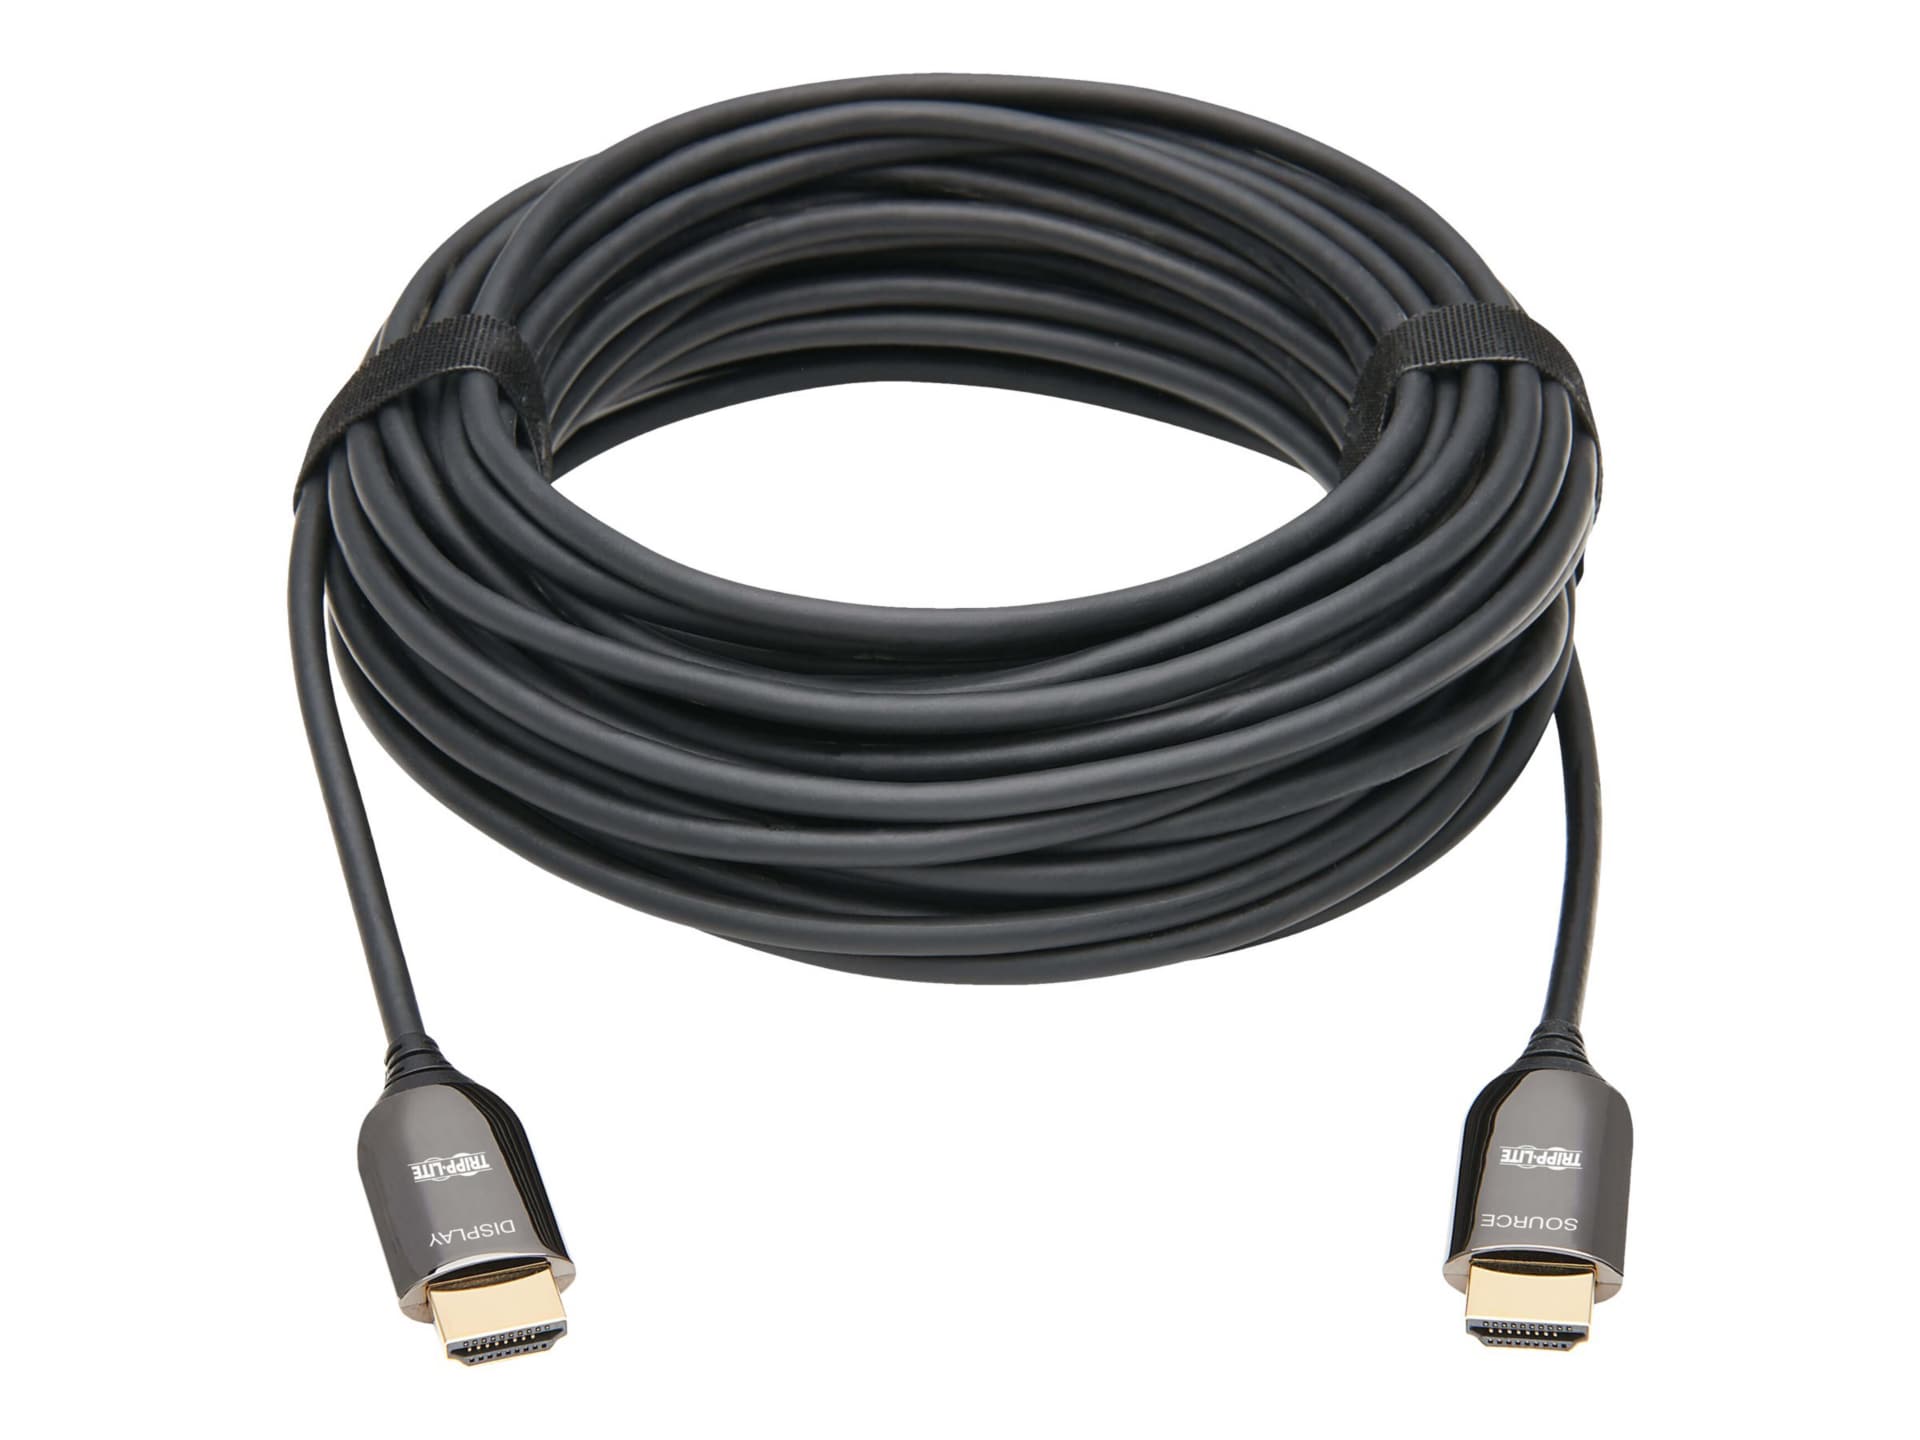 Tripp Lite Fiber Active Optical Cable (AOC) 8K HDMI Plenum-Rated - UHD @ 60 Hz, HDR, M/M, Black, 25 m - HDMI cable with